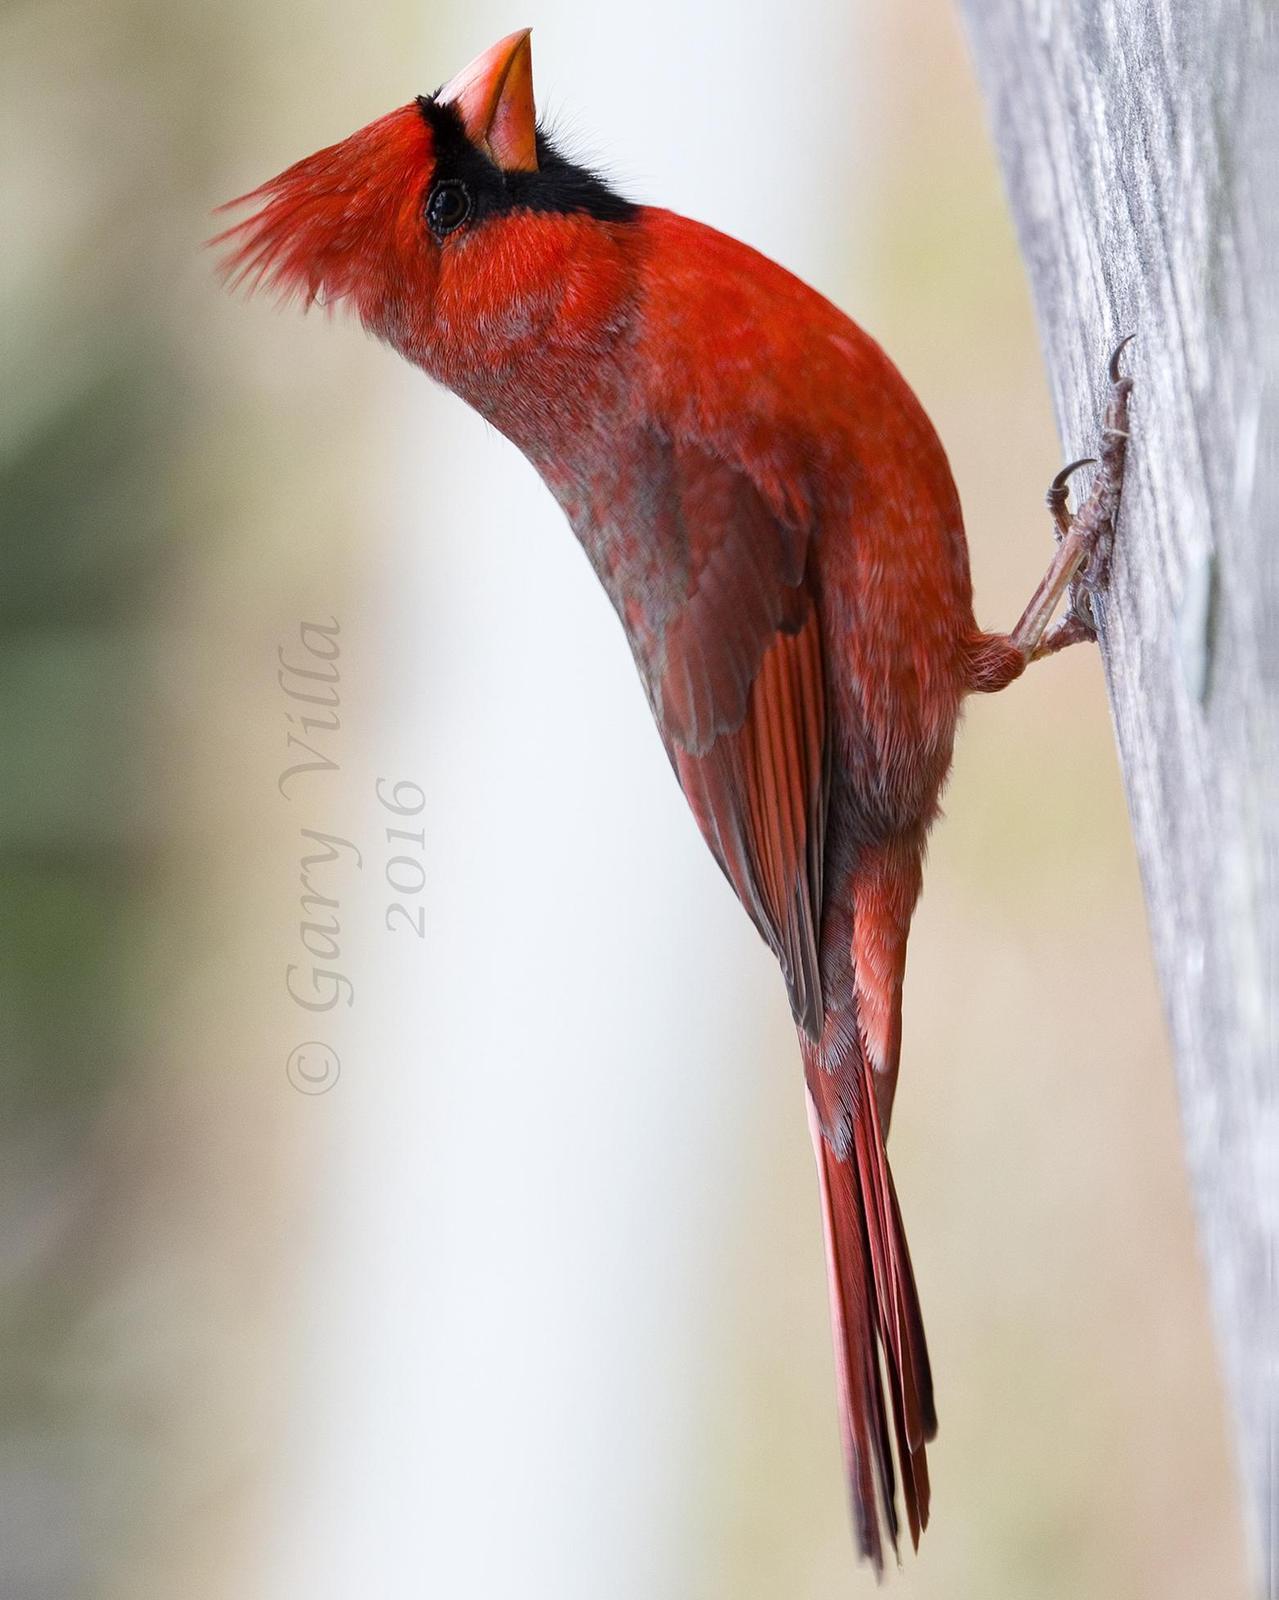 Northern Cardinal Photo by Gary Villa